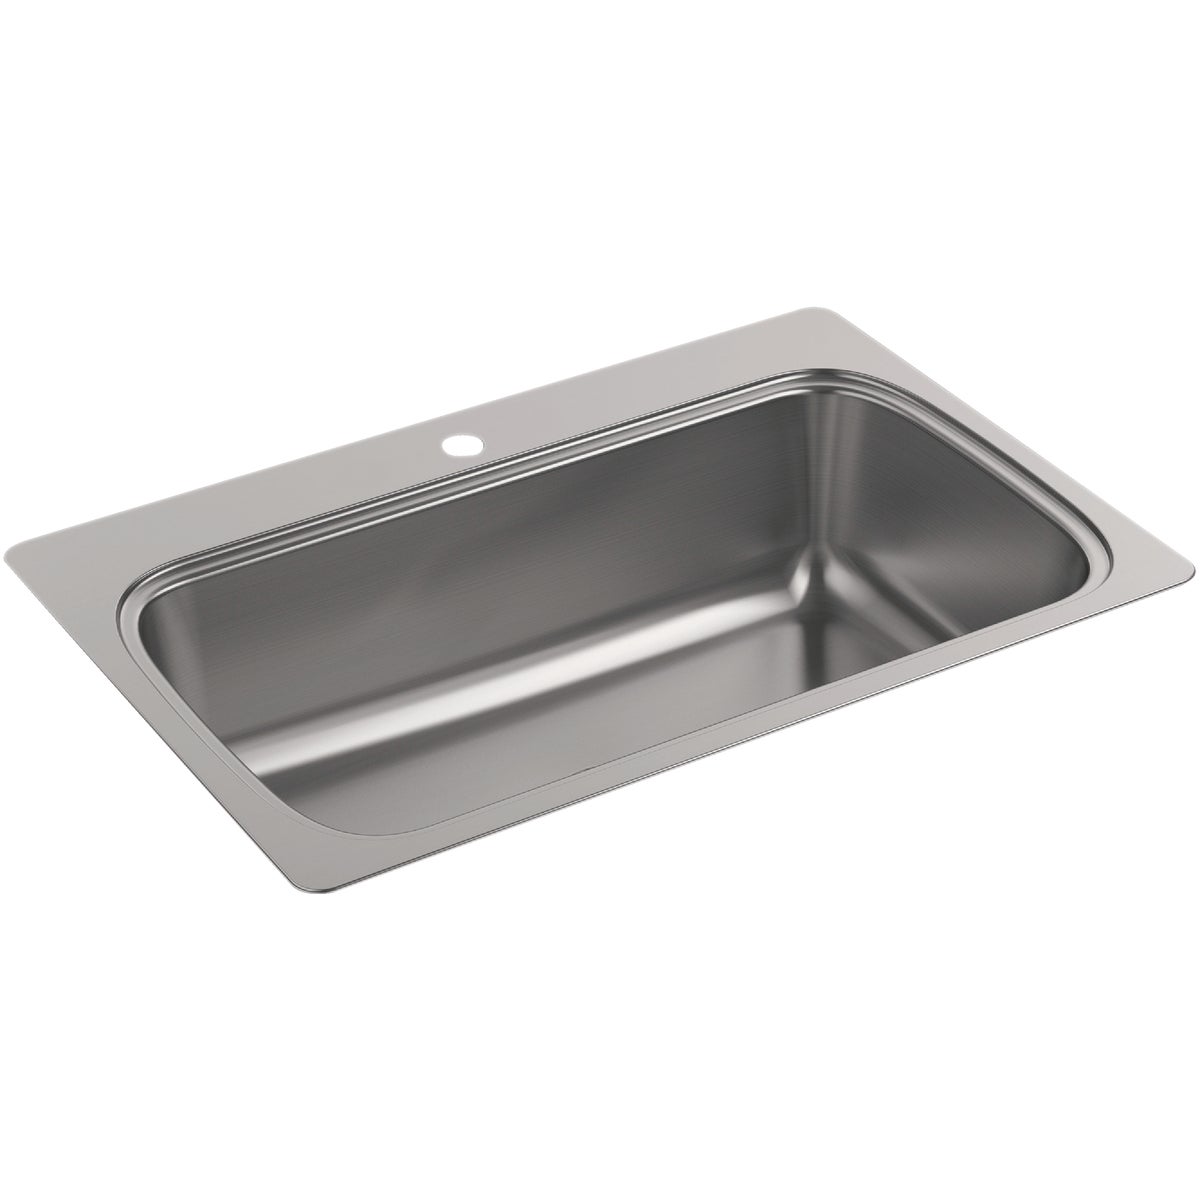 Kohler Verse Single Bowl 33 In. x 22 In. x 9-5/16 In. Deep Stainless Steel Top Mount Kitchen Sink